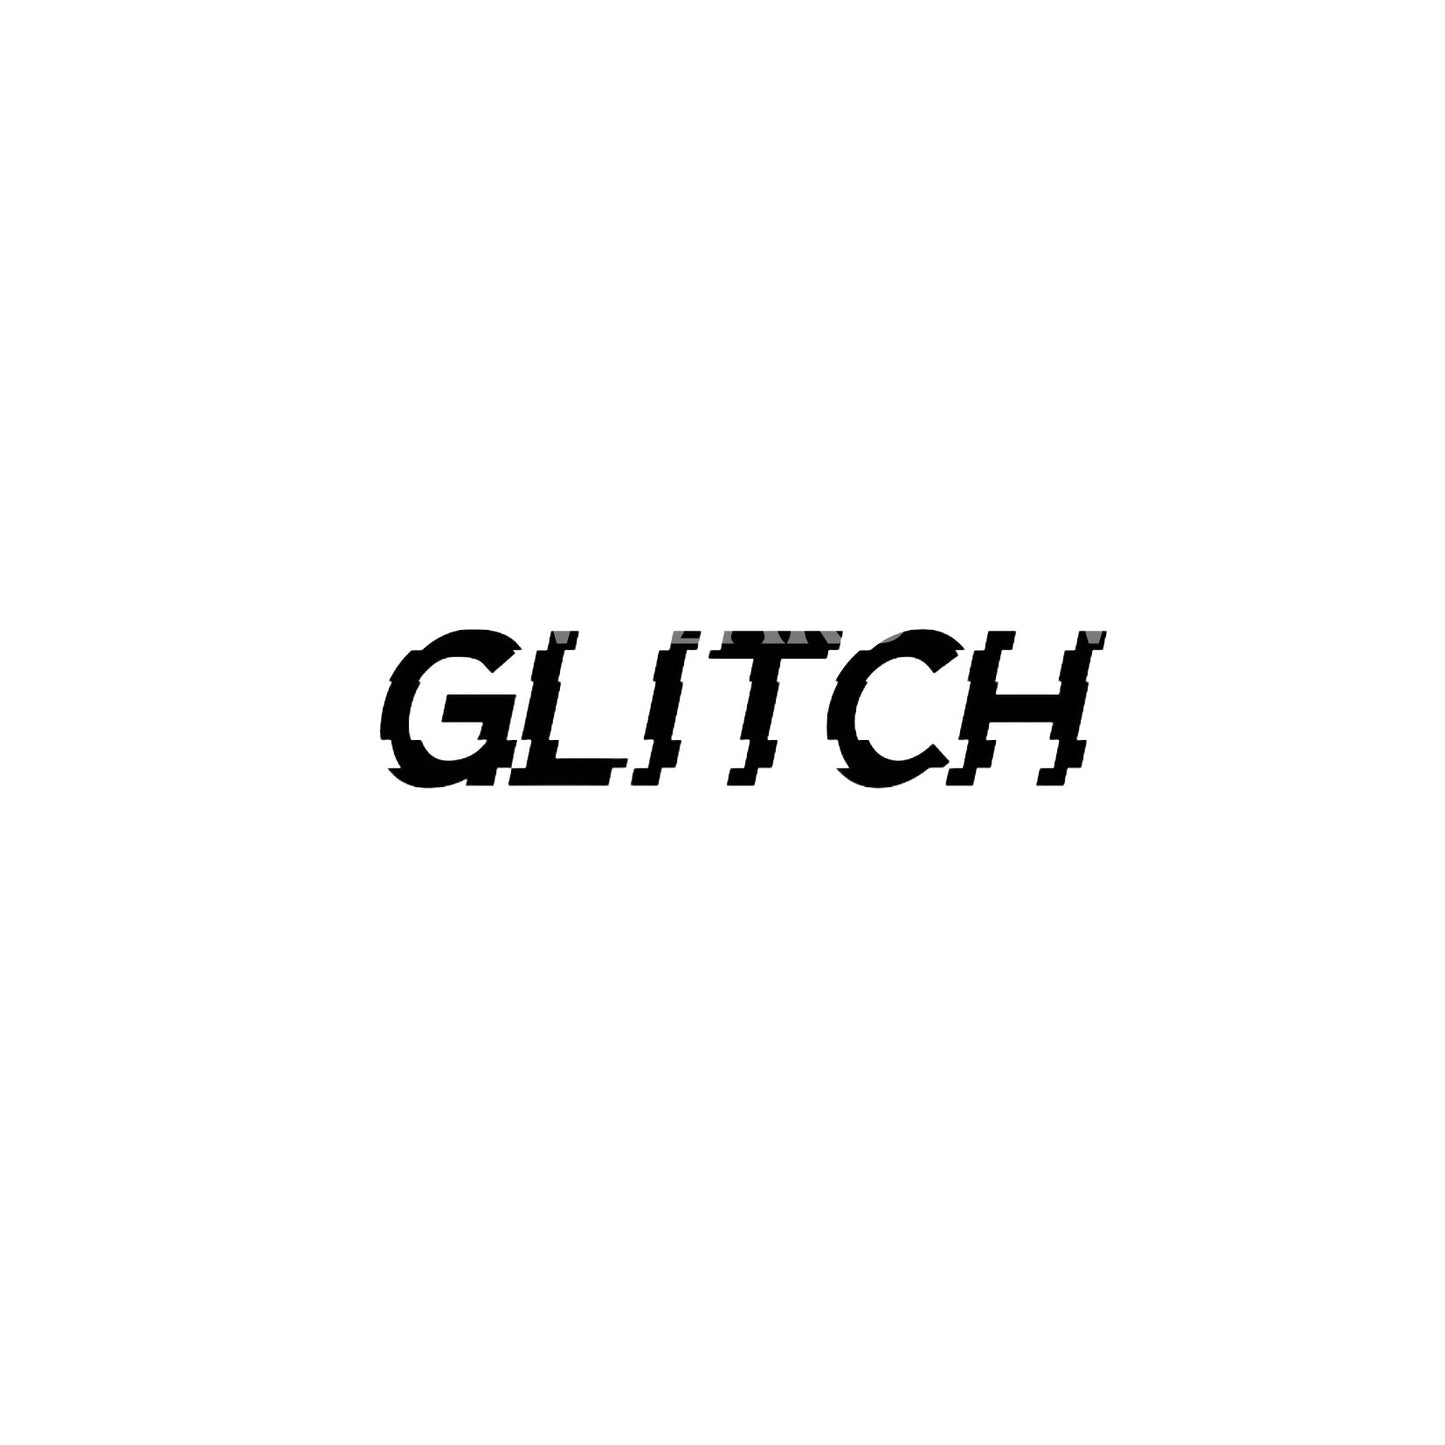 Glitch Lettering Tattoo Design